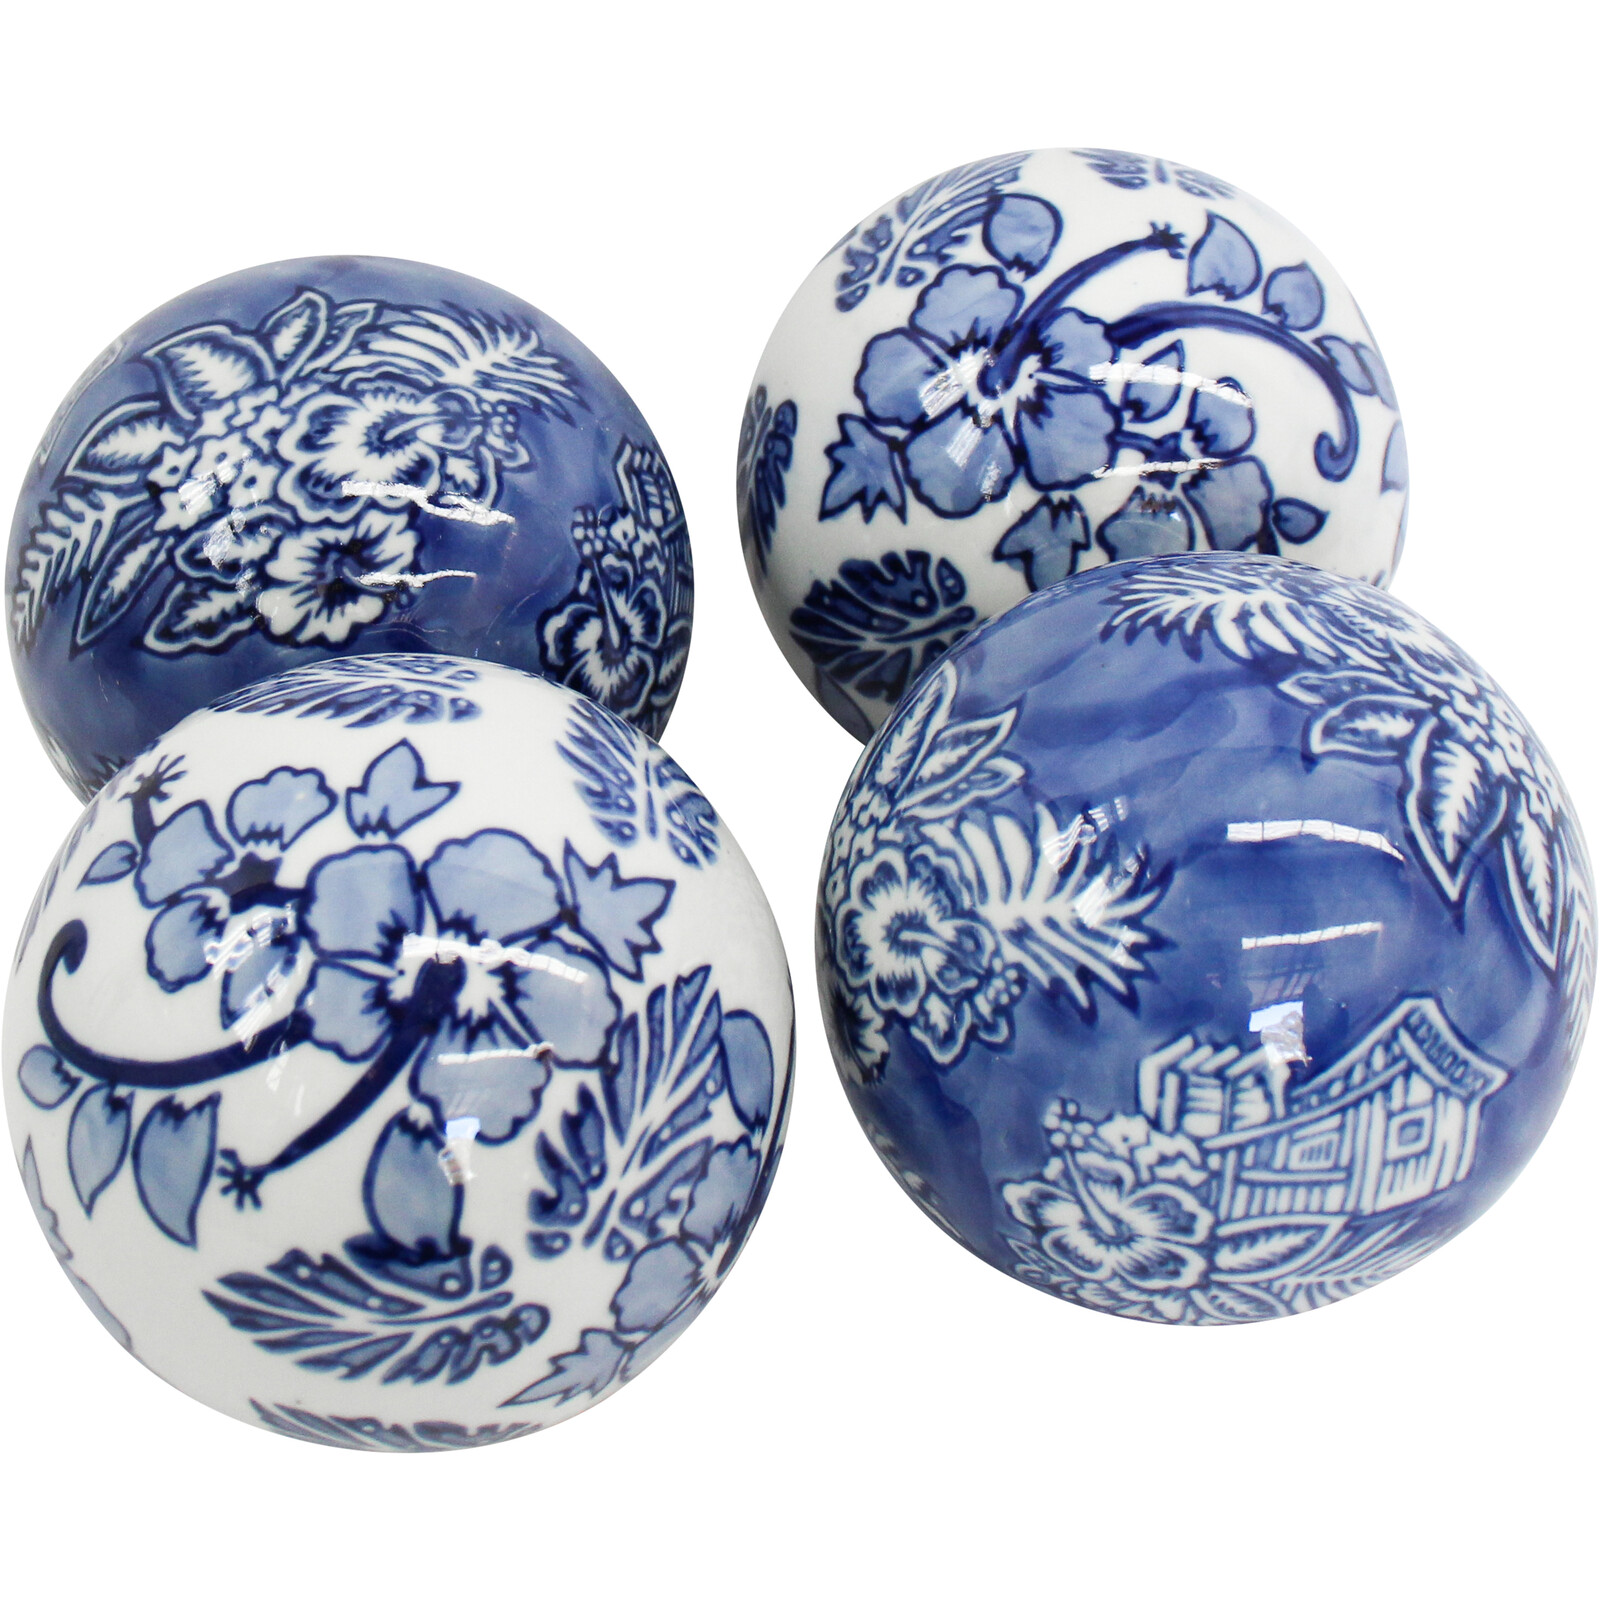 Porcelain Balls 4 inch  S/4 South Pacific